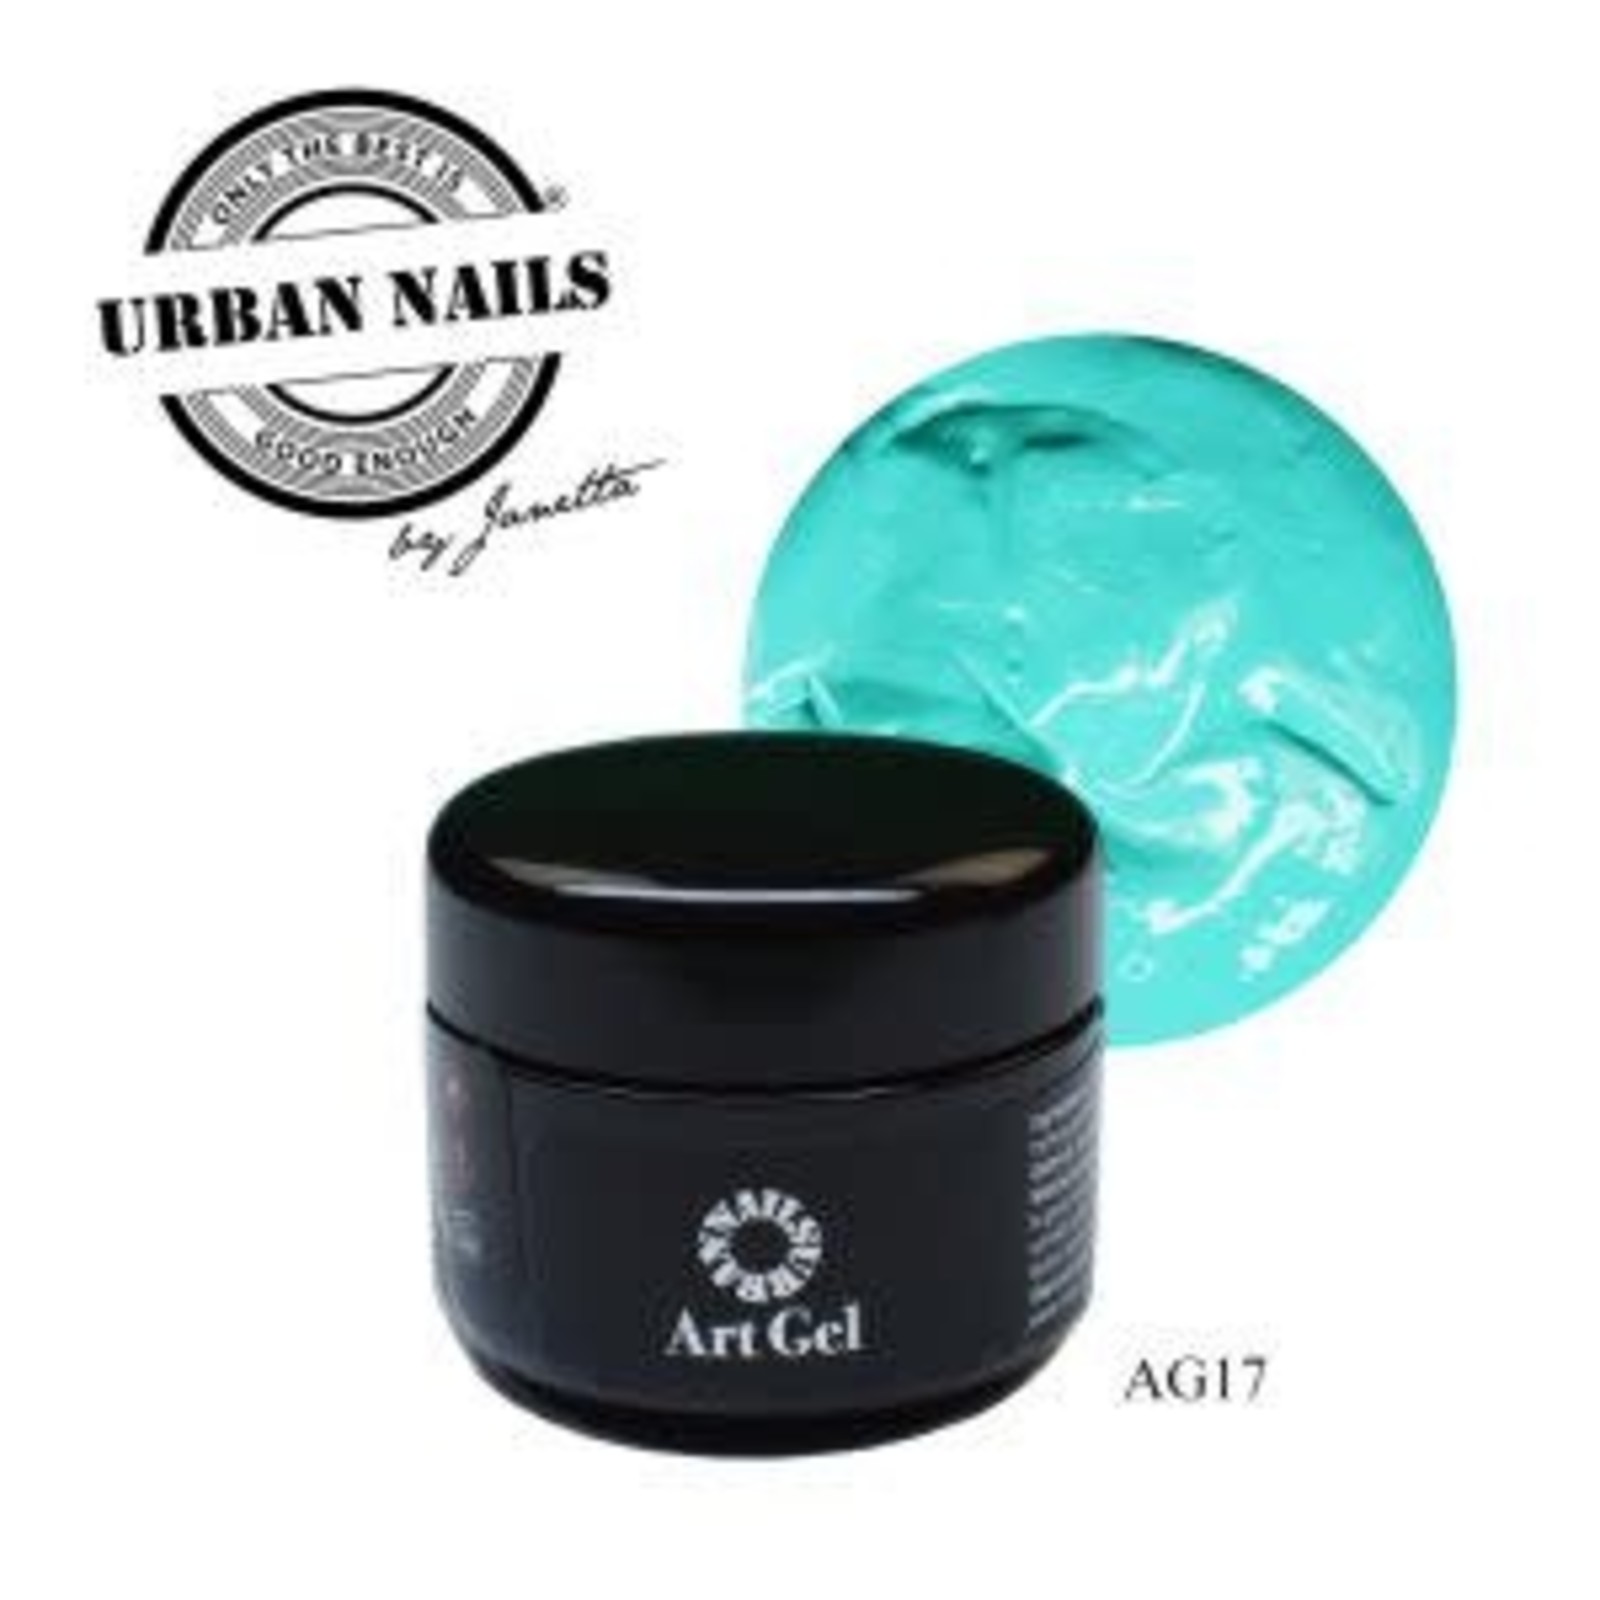 Urban nails Art gel AG17